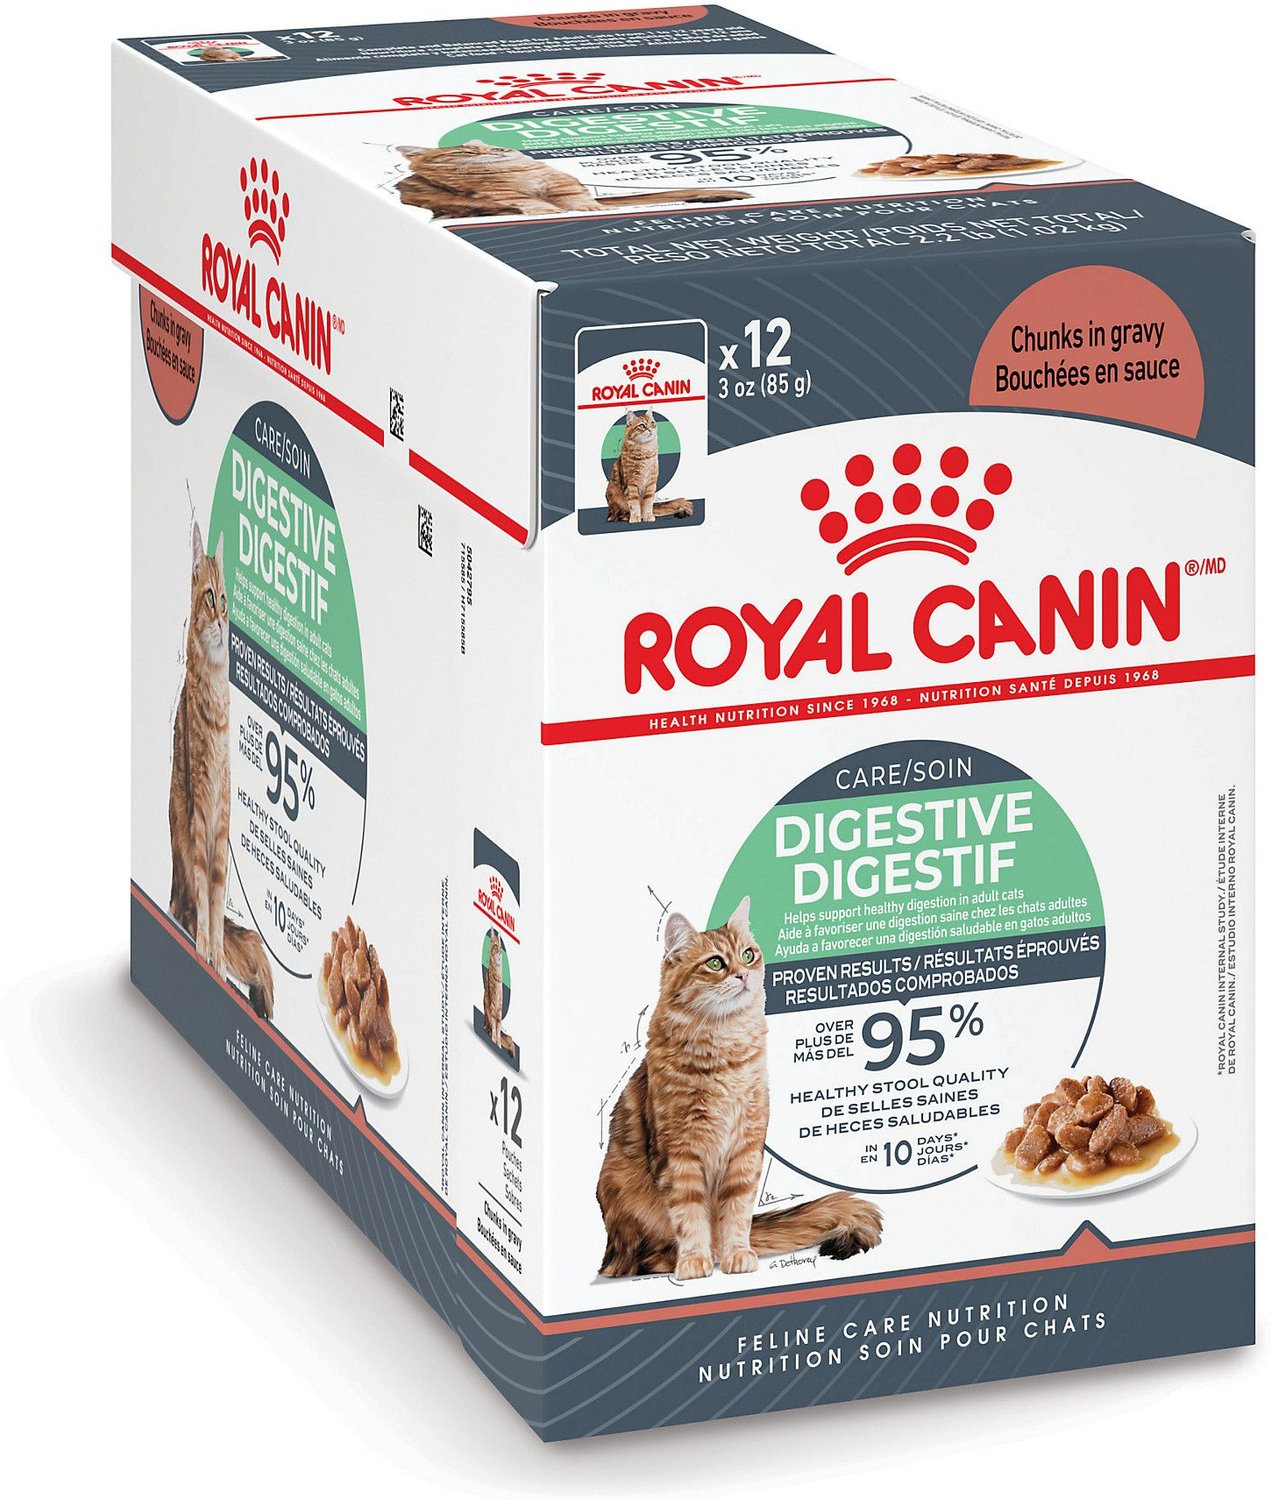 Royal Canin Sensitive Stomach Cat Food Reviews